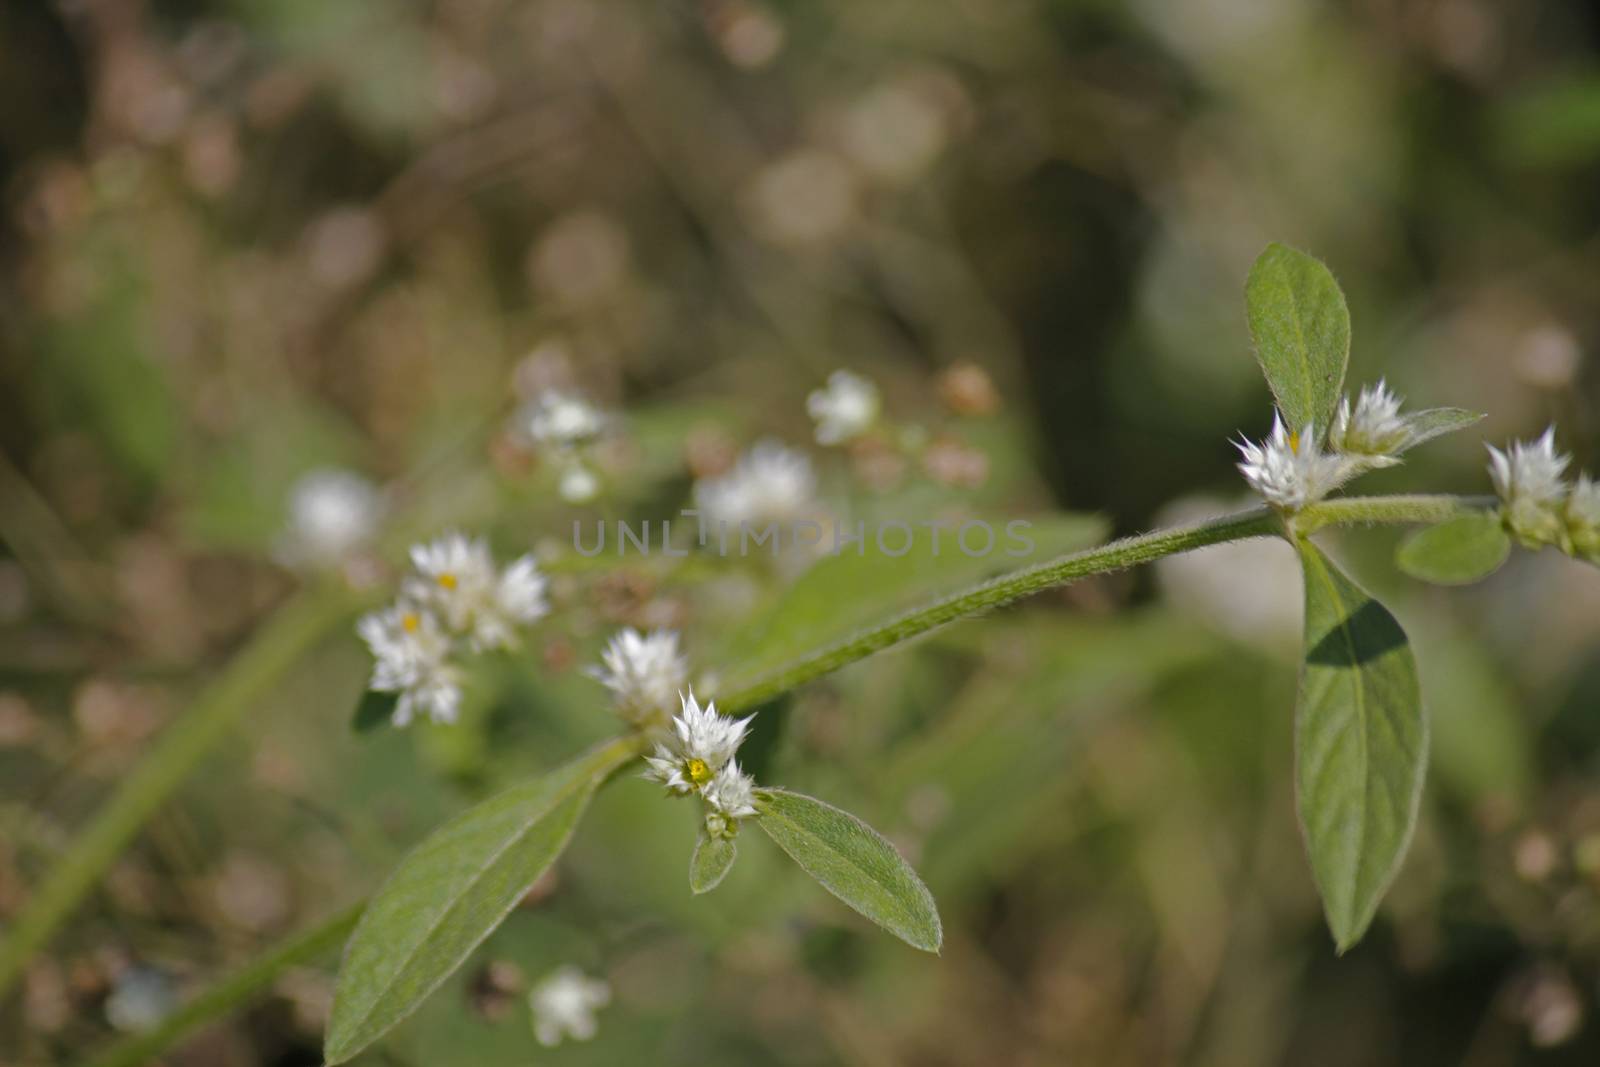 Sanguinarea, Alternanthera ficoidea is a perennial herb